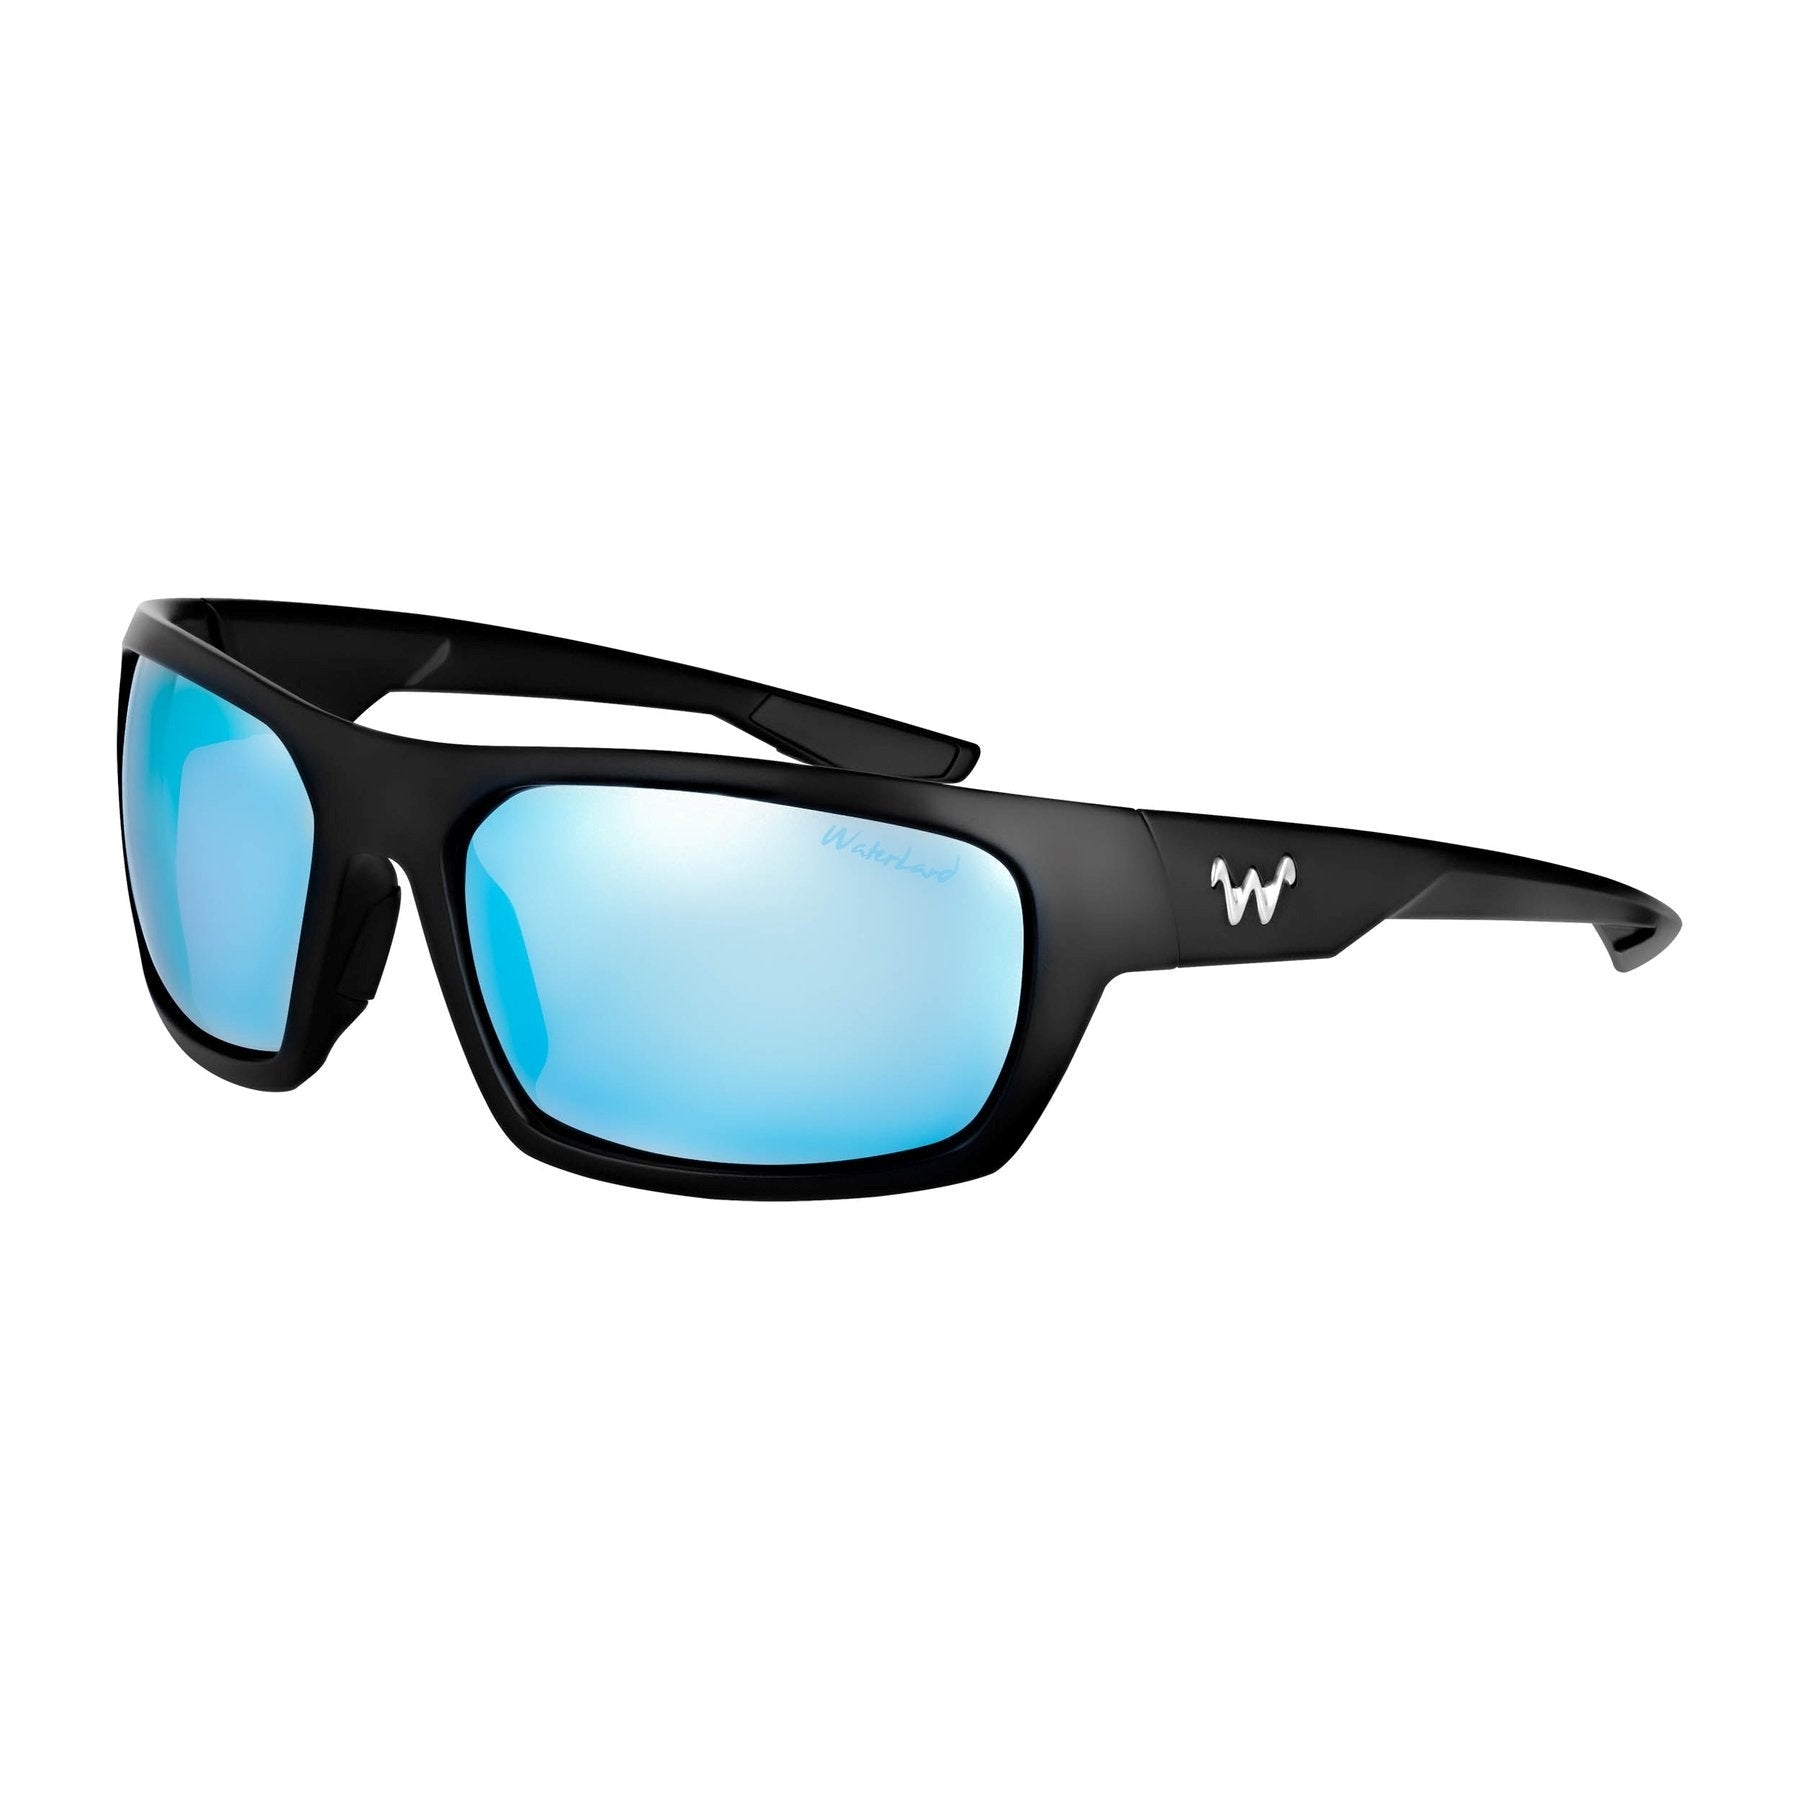 WaterLand Milliken Sunglasses BlackWater Frame with Blue Mirror